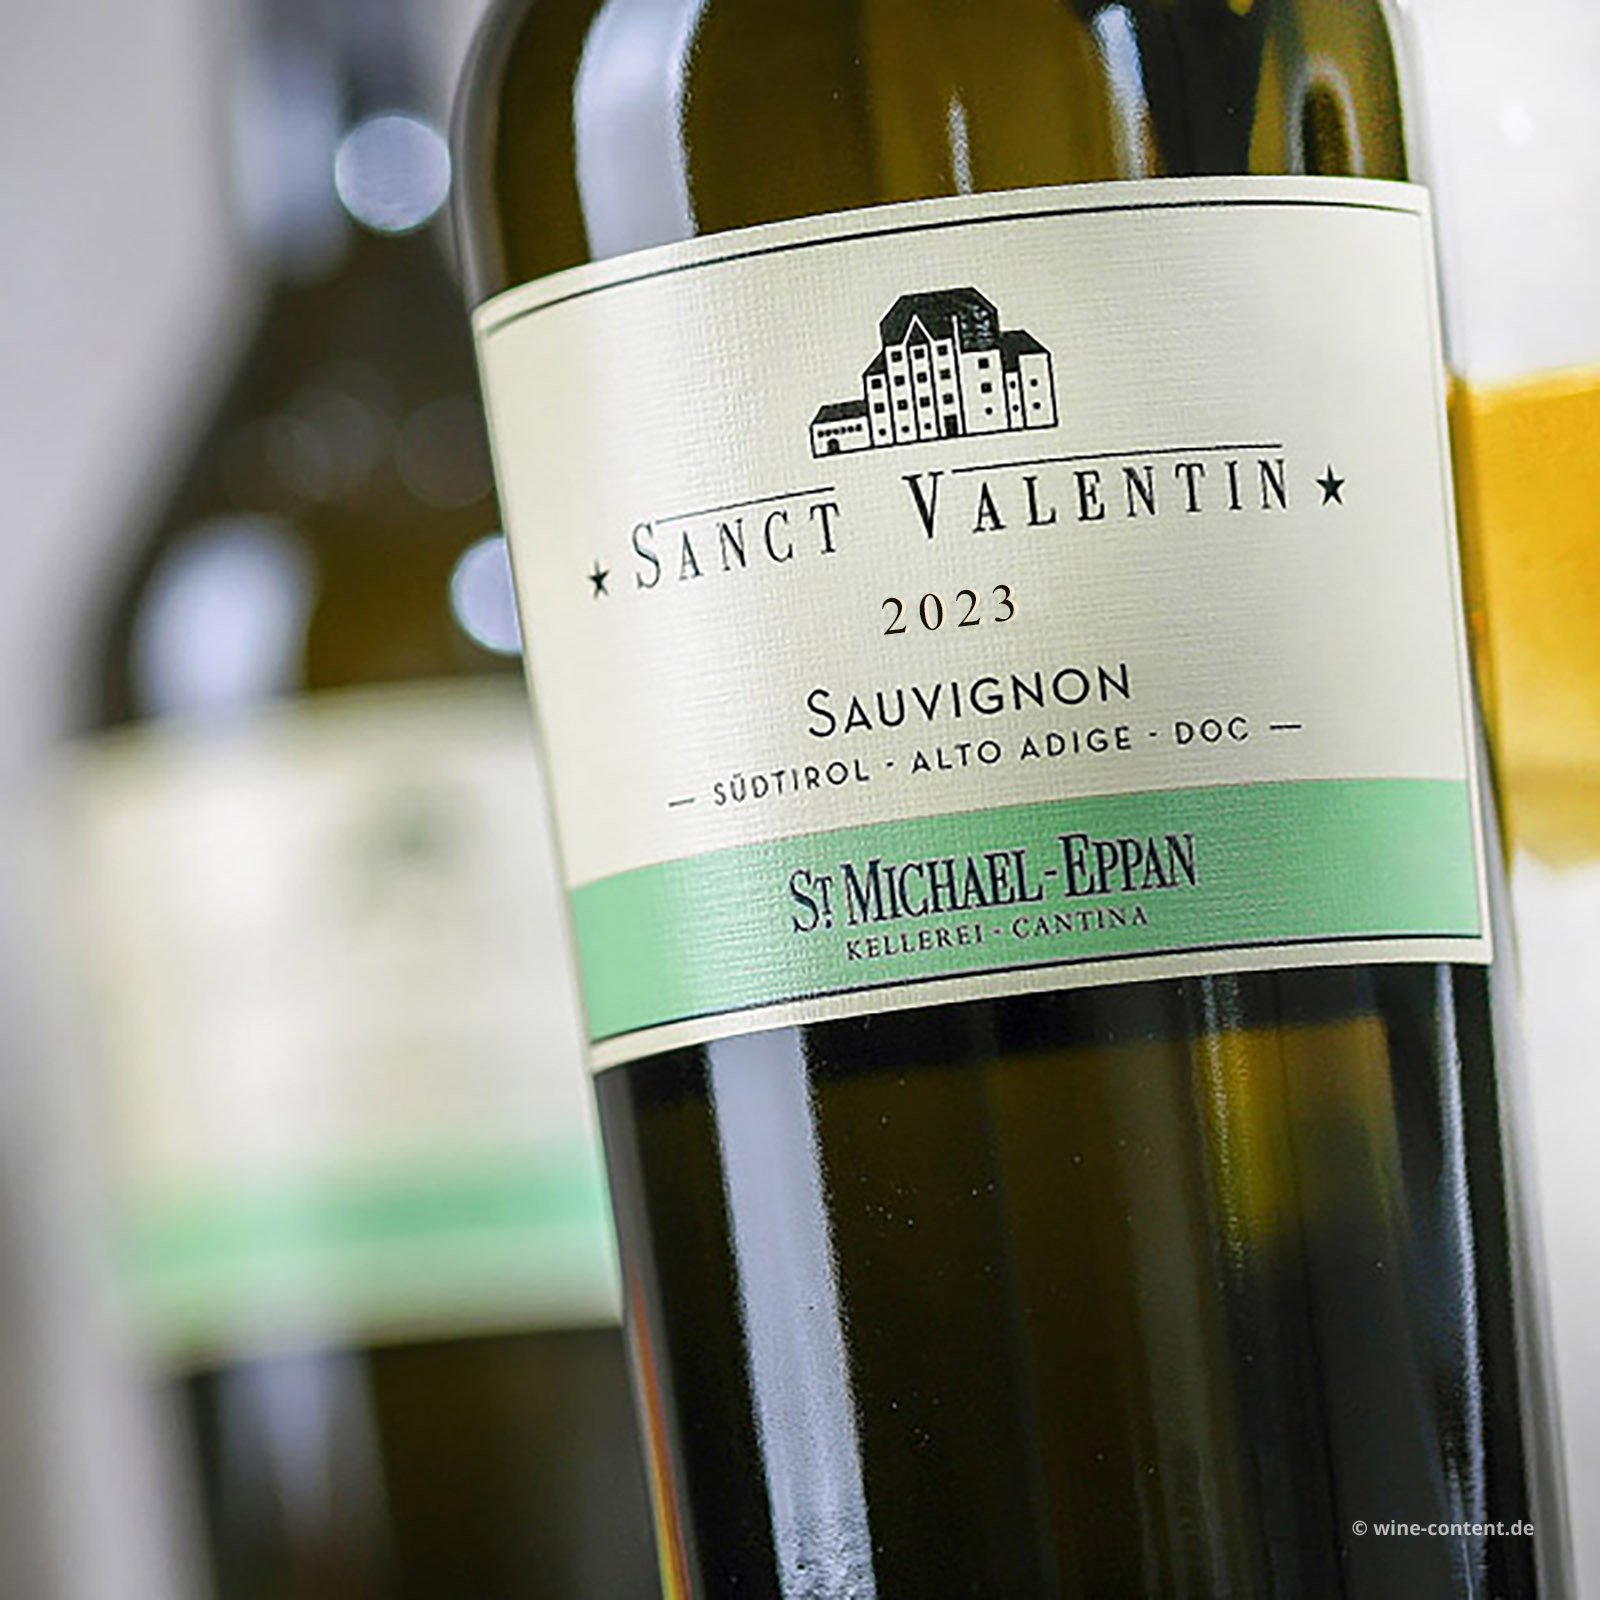 Sauvignon Blanc 2023 Sanct Valentin